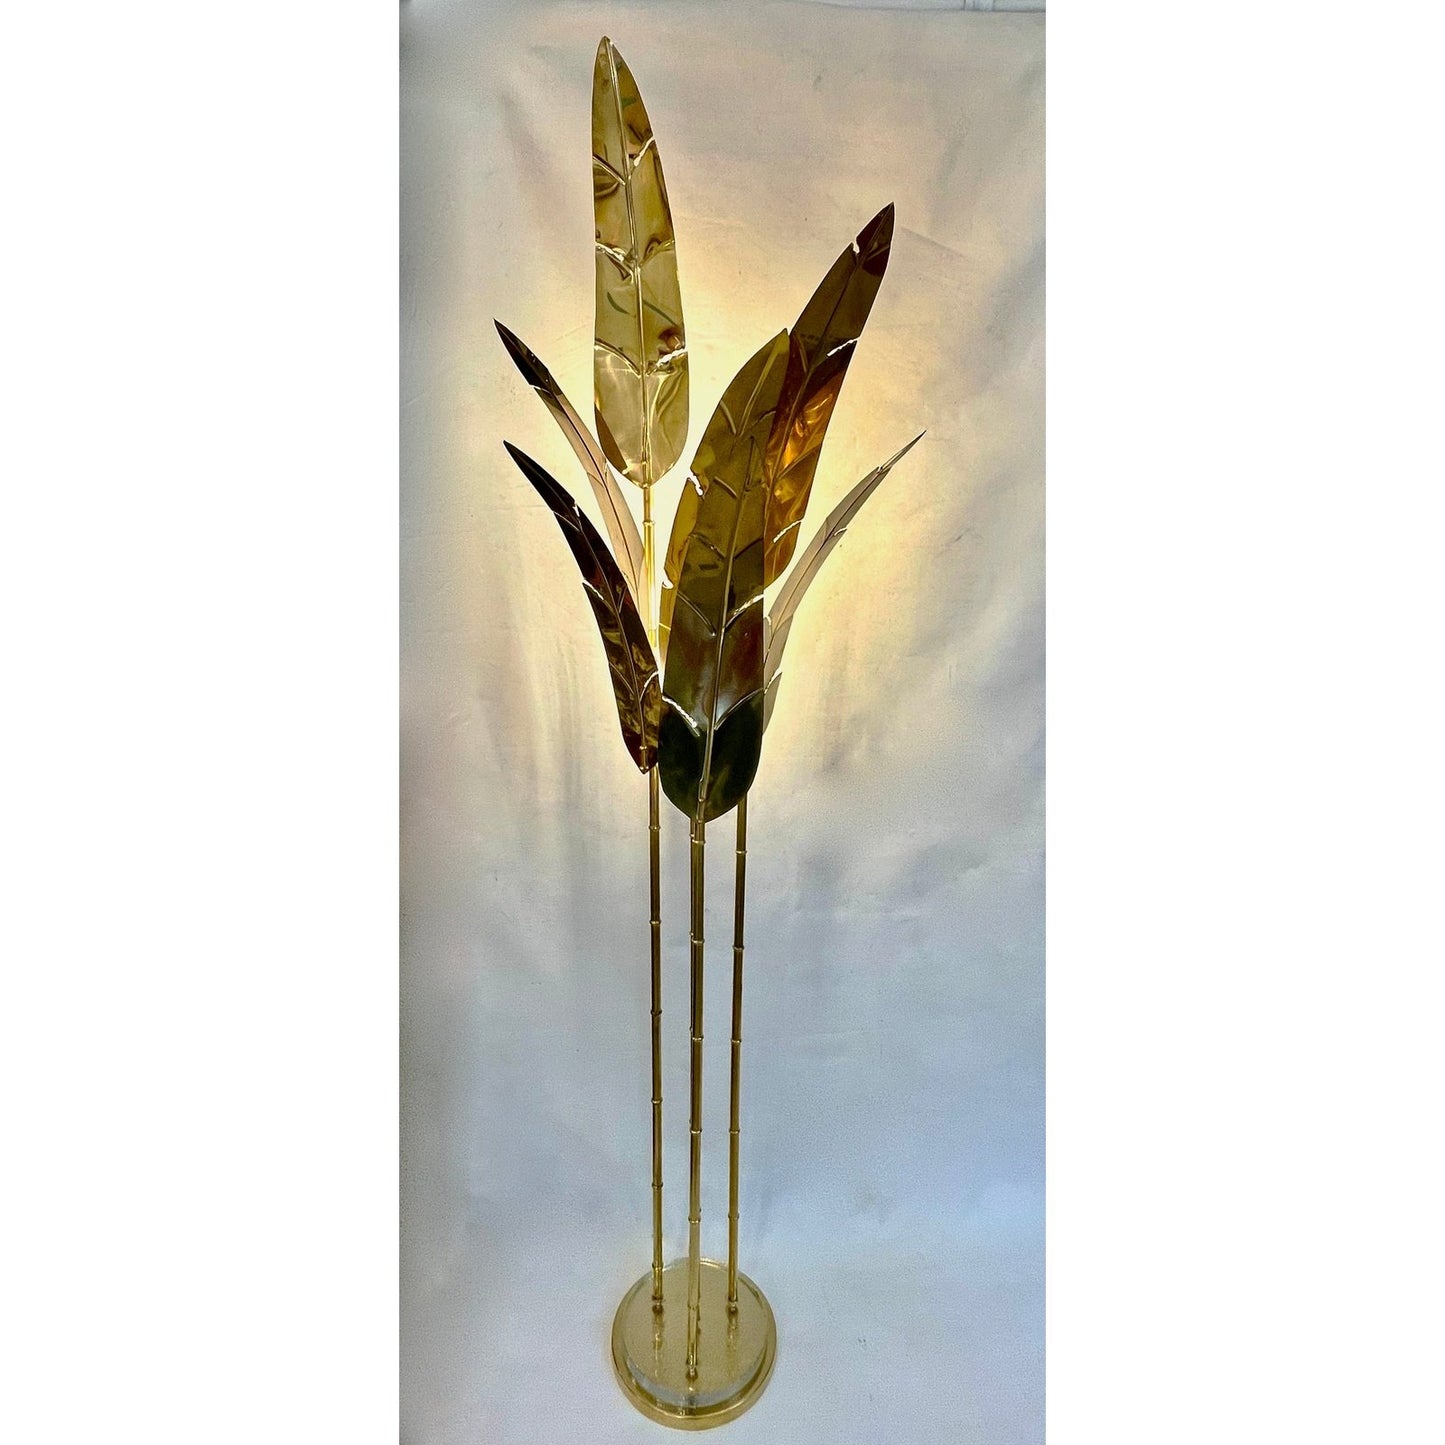 Contemporary Italian Art Deco 7-Leaf Palm Tree Organic Modern Brass Floor Lamp